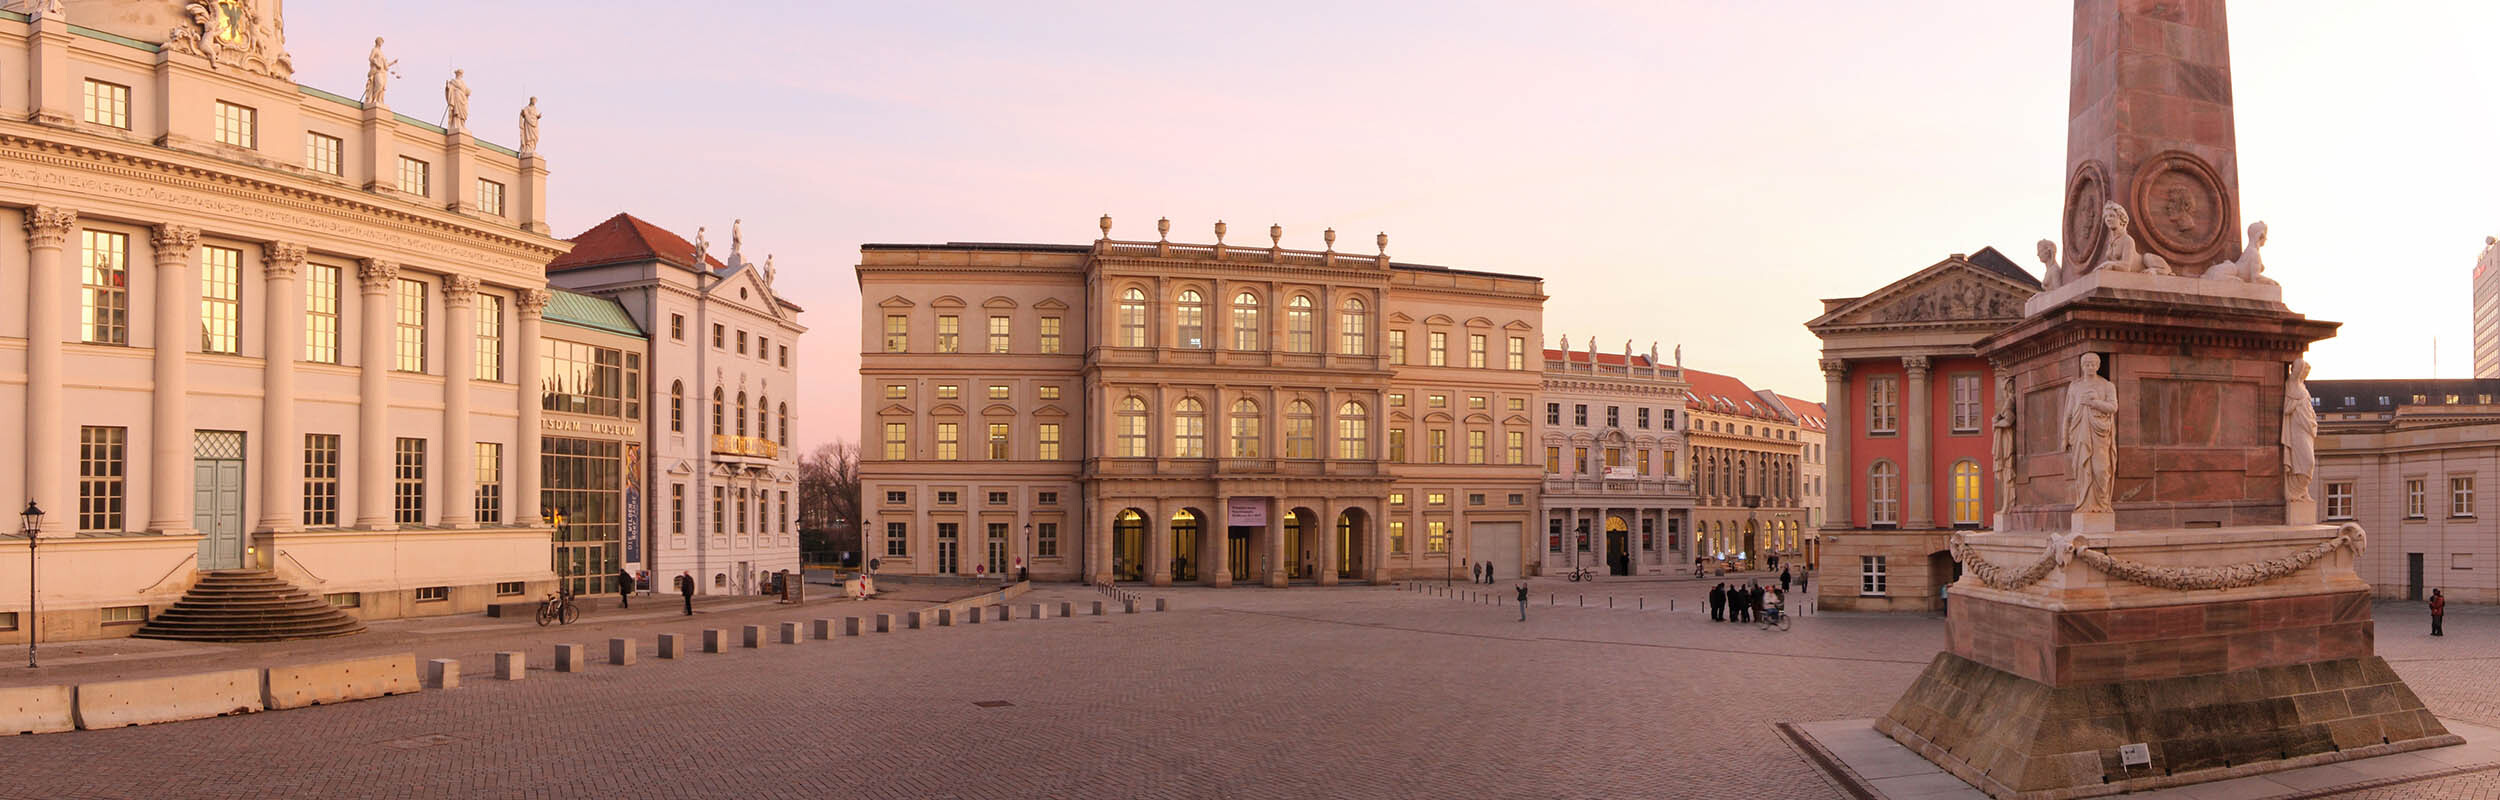 Foto: Platzfläche Alter Markt mit Potsdam Museum, Museum Barberini, Landtagsgebäude und Obelisken.